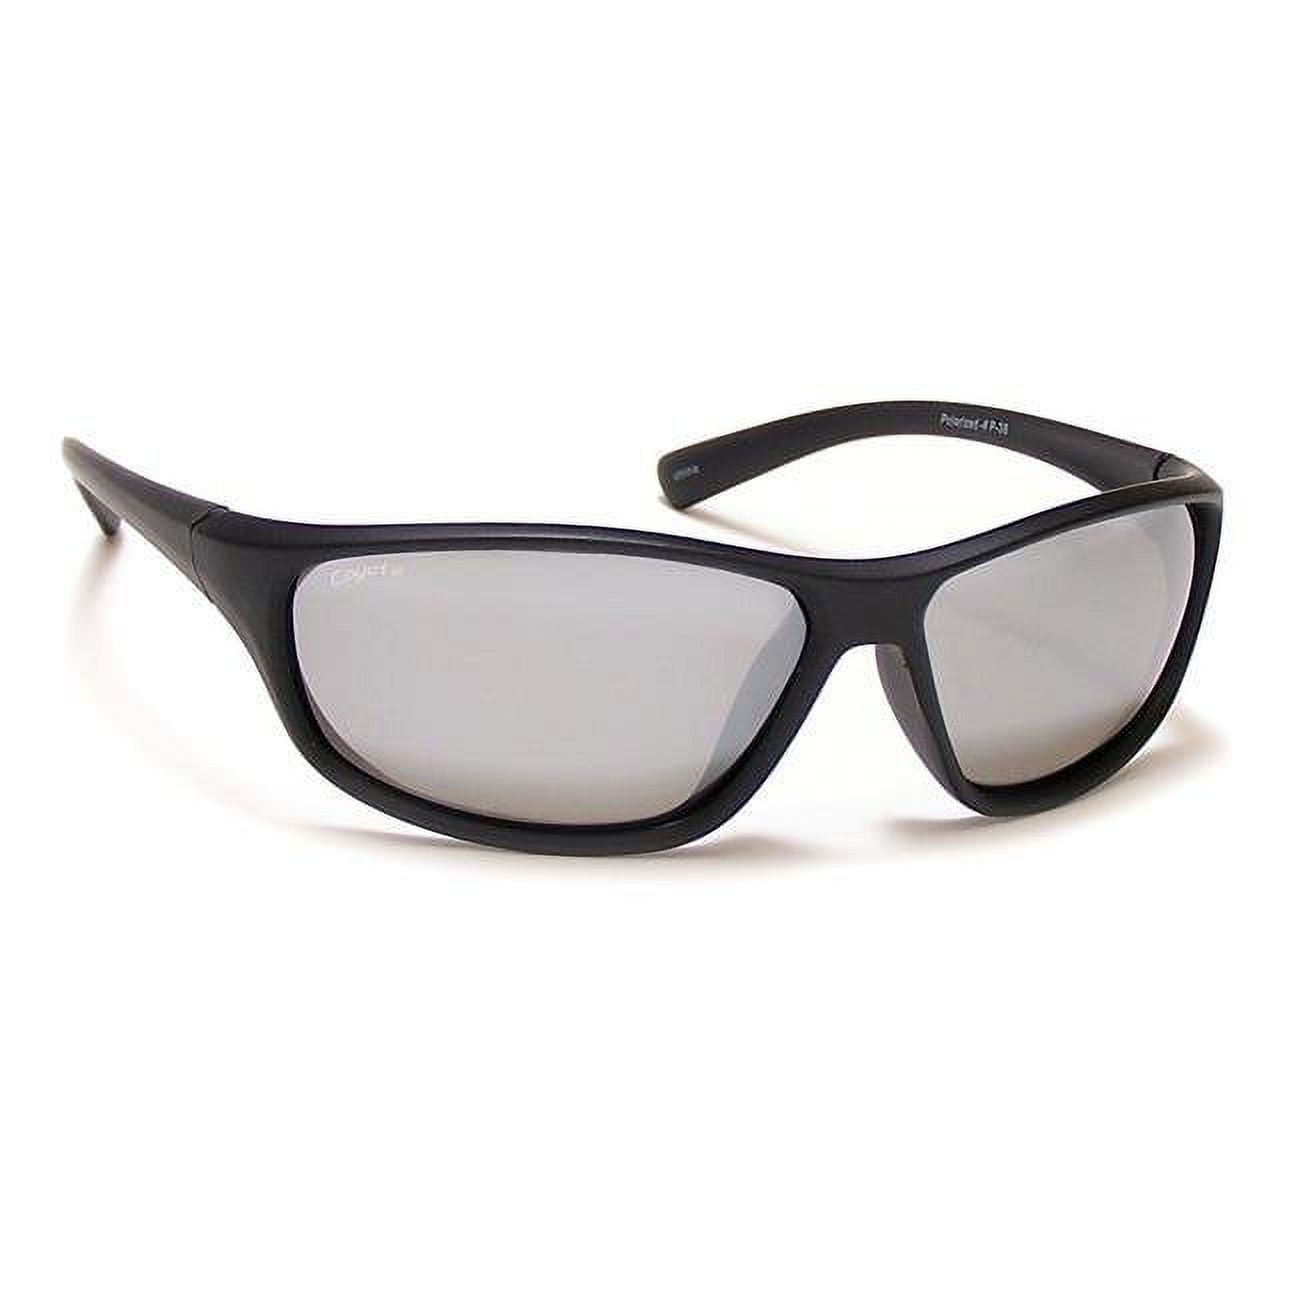 Coyote Eyewear 680562076035 P-38 Polarized Sport Sunglasses, Matte Black & Silver Frame - image 1 of 2